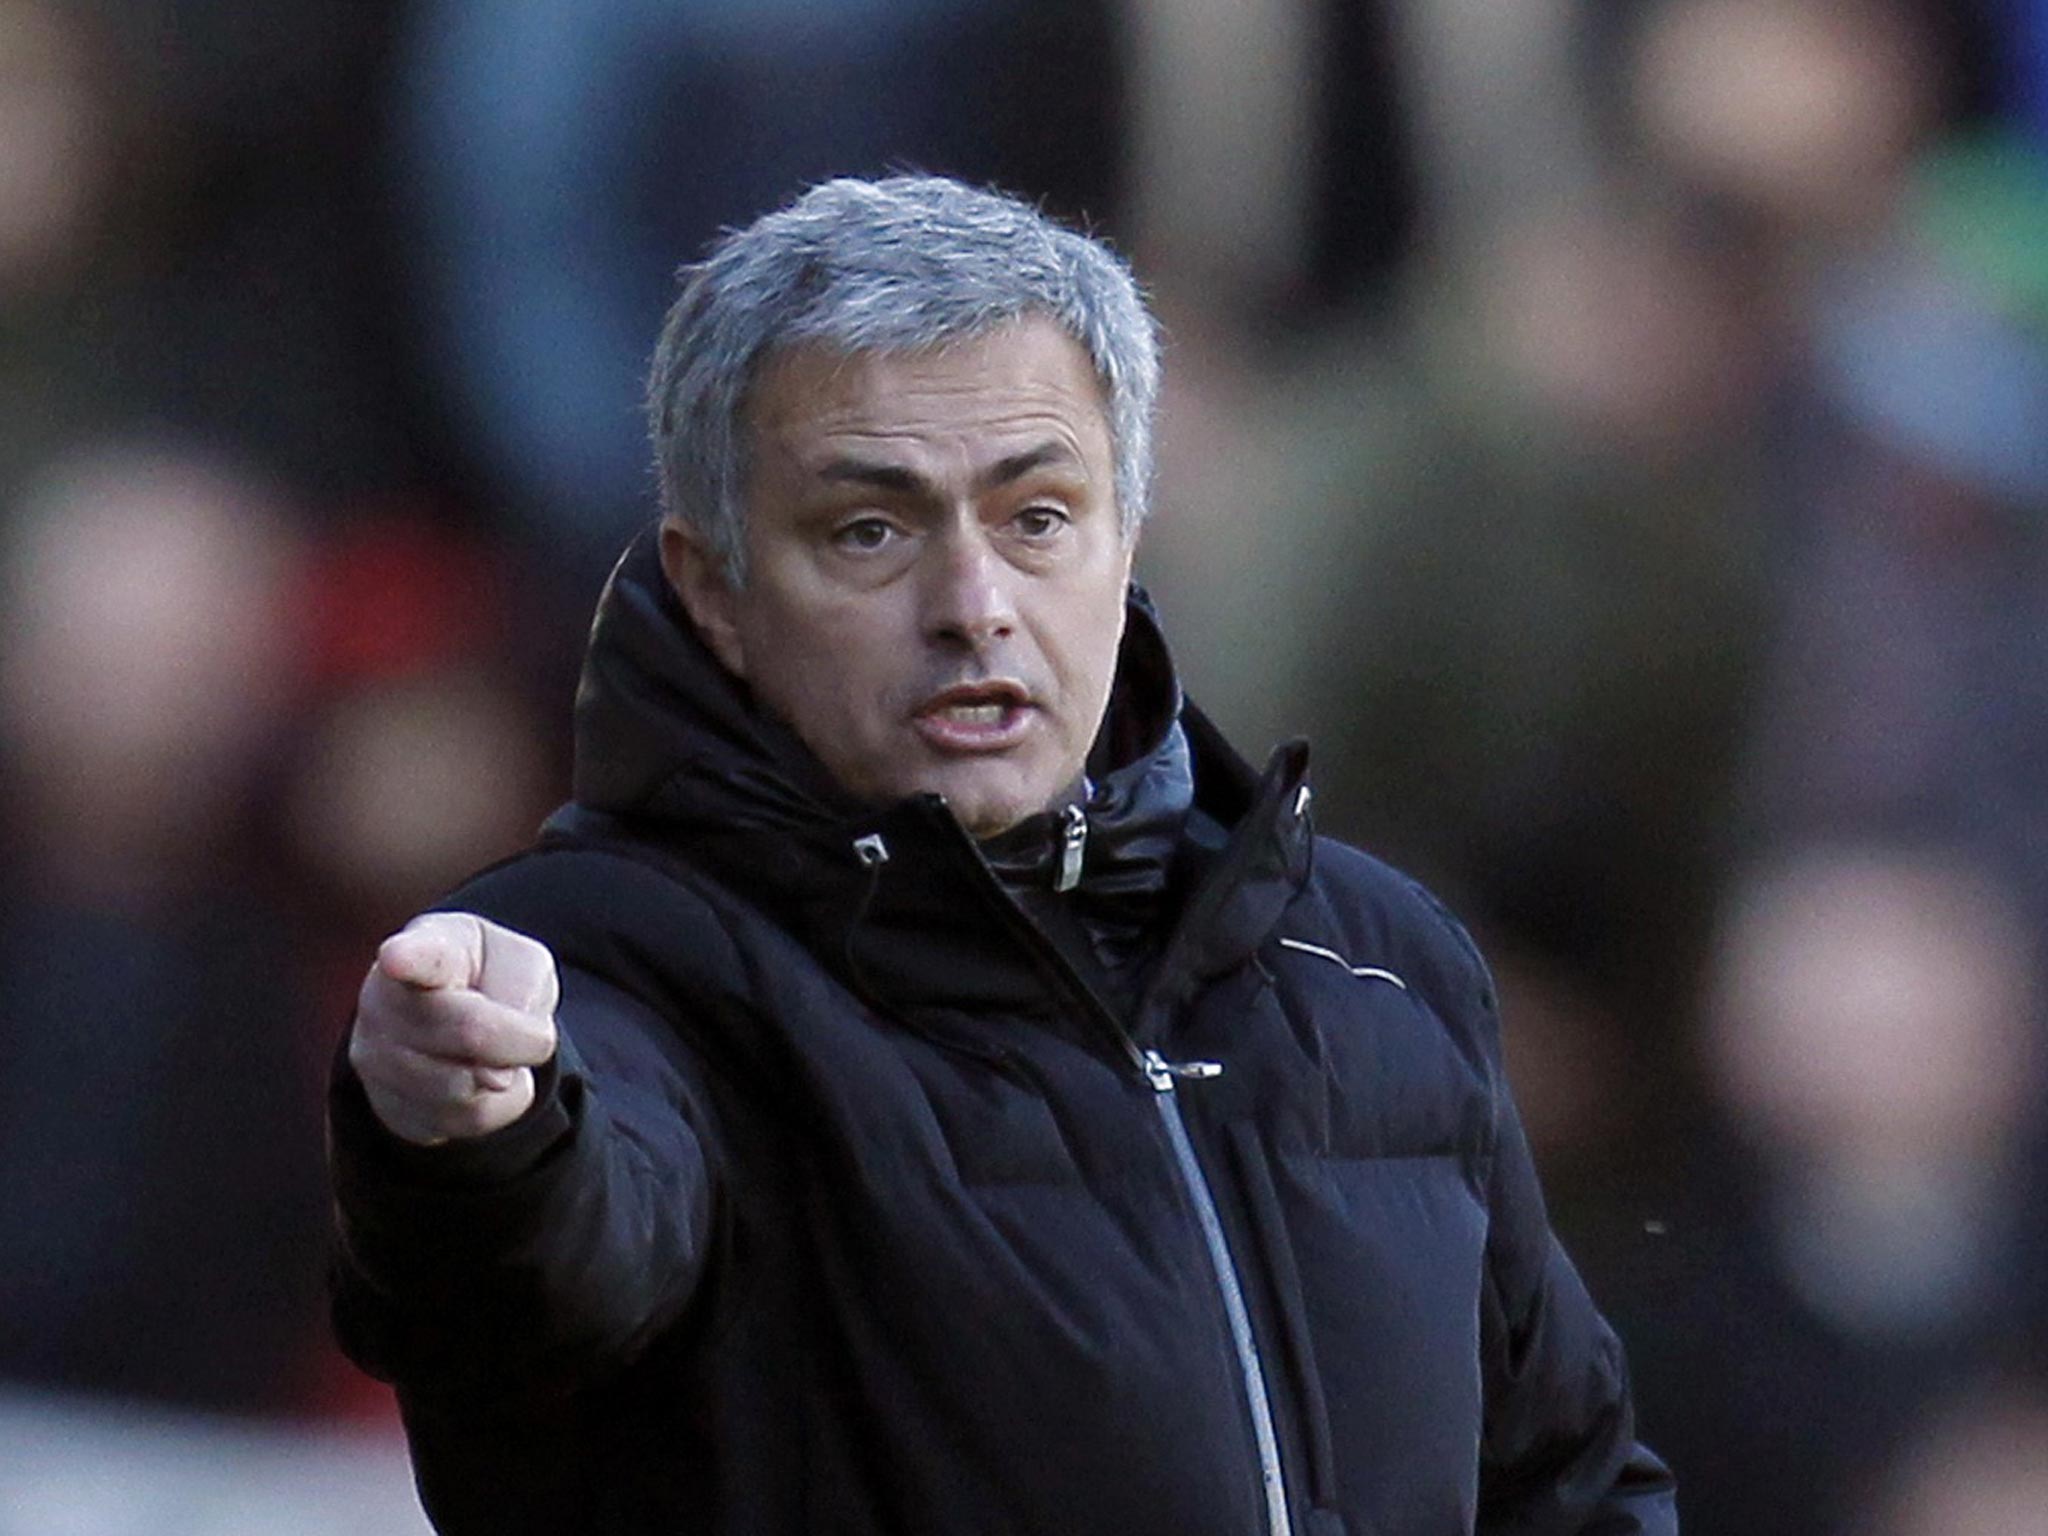 Jose Mourinho makes a gesture form the touchline